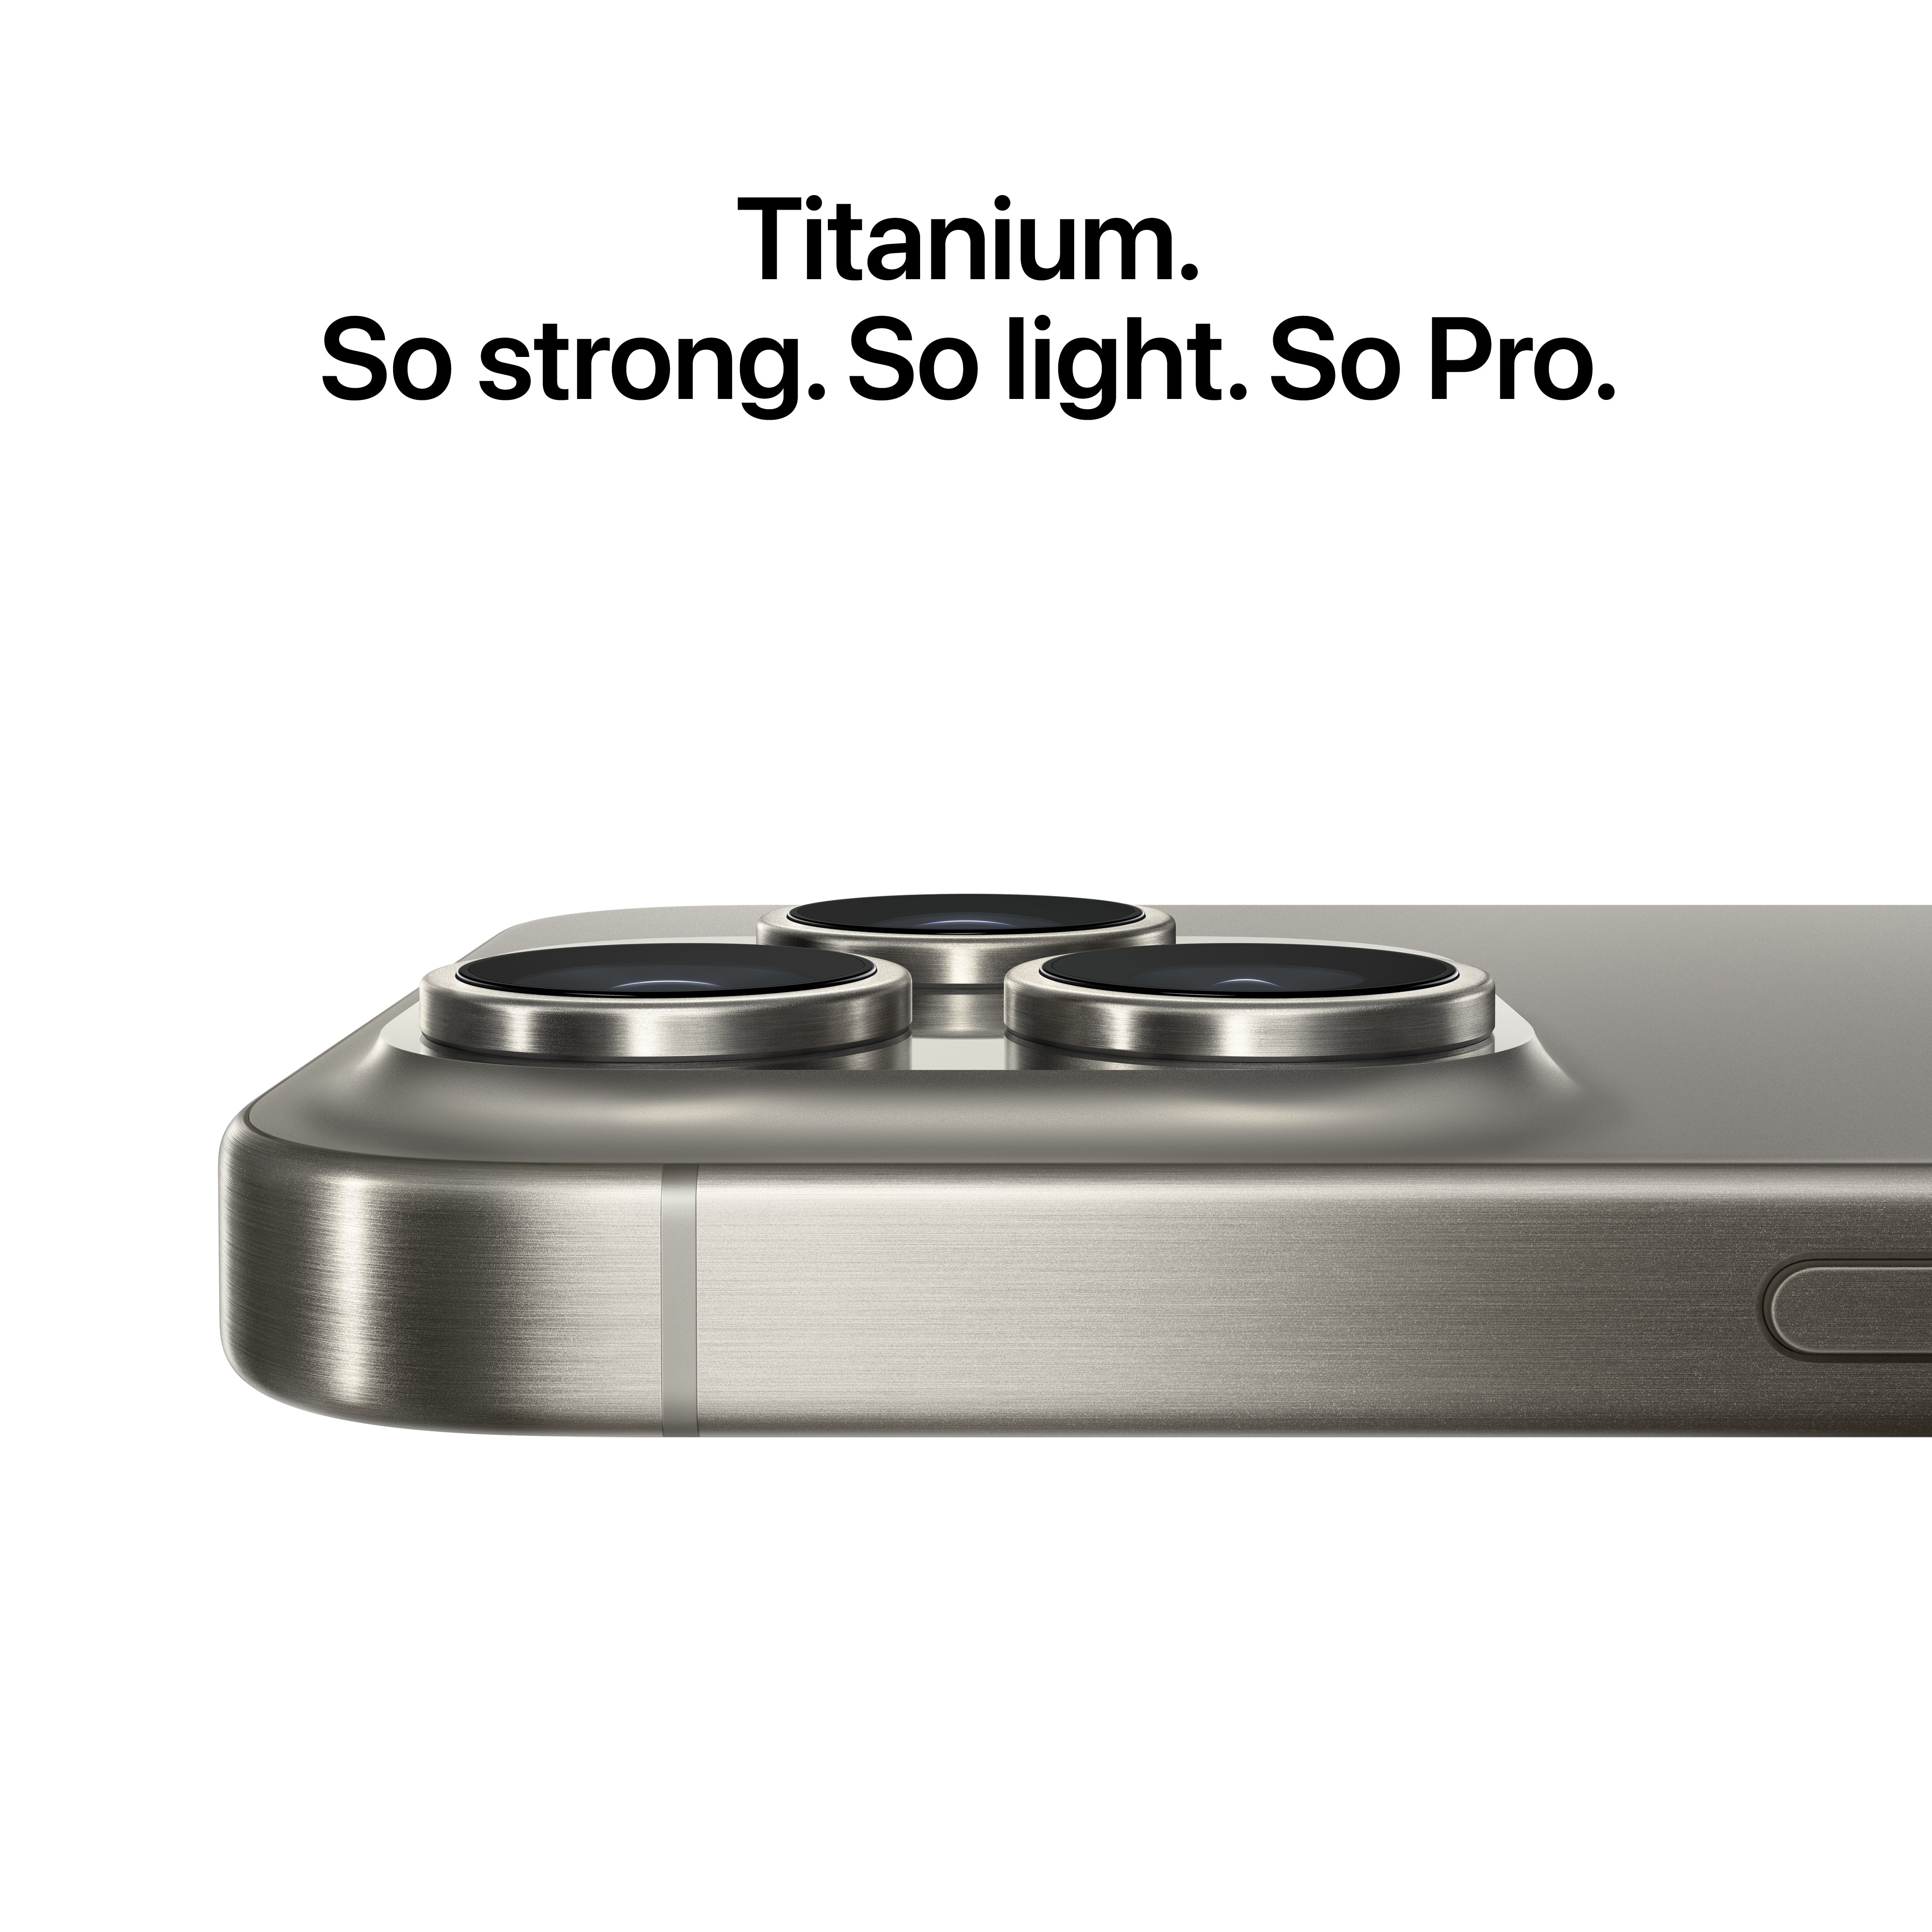 iPhone 15 Pro 256GB White Titanium - MTV43ZP/A